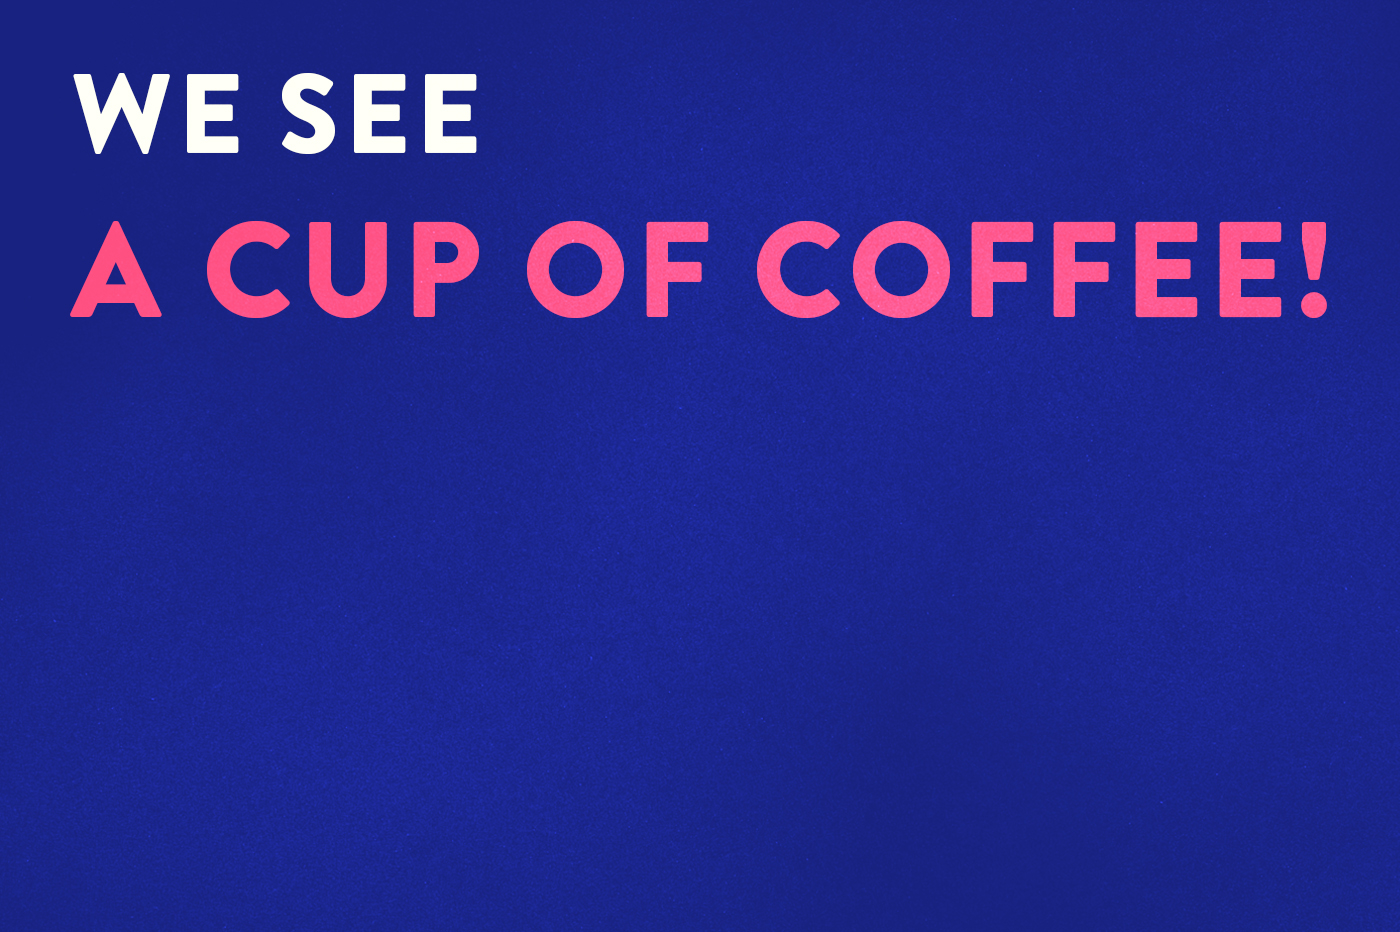 cafe coffee shop espresso logo colour typography   side Project branding  bar